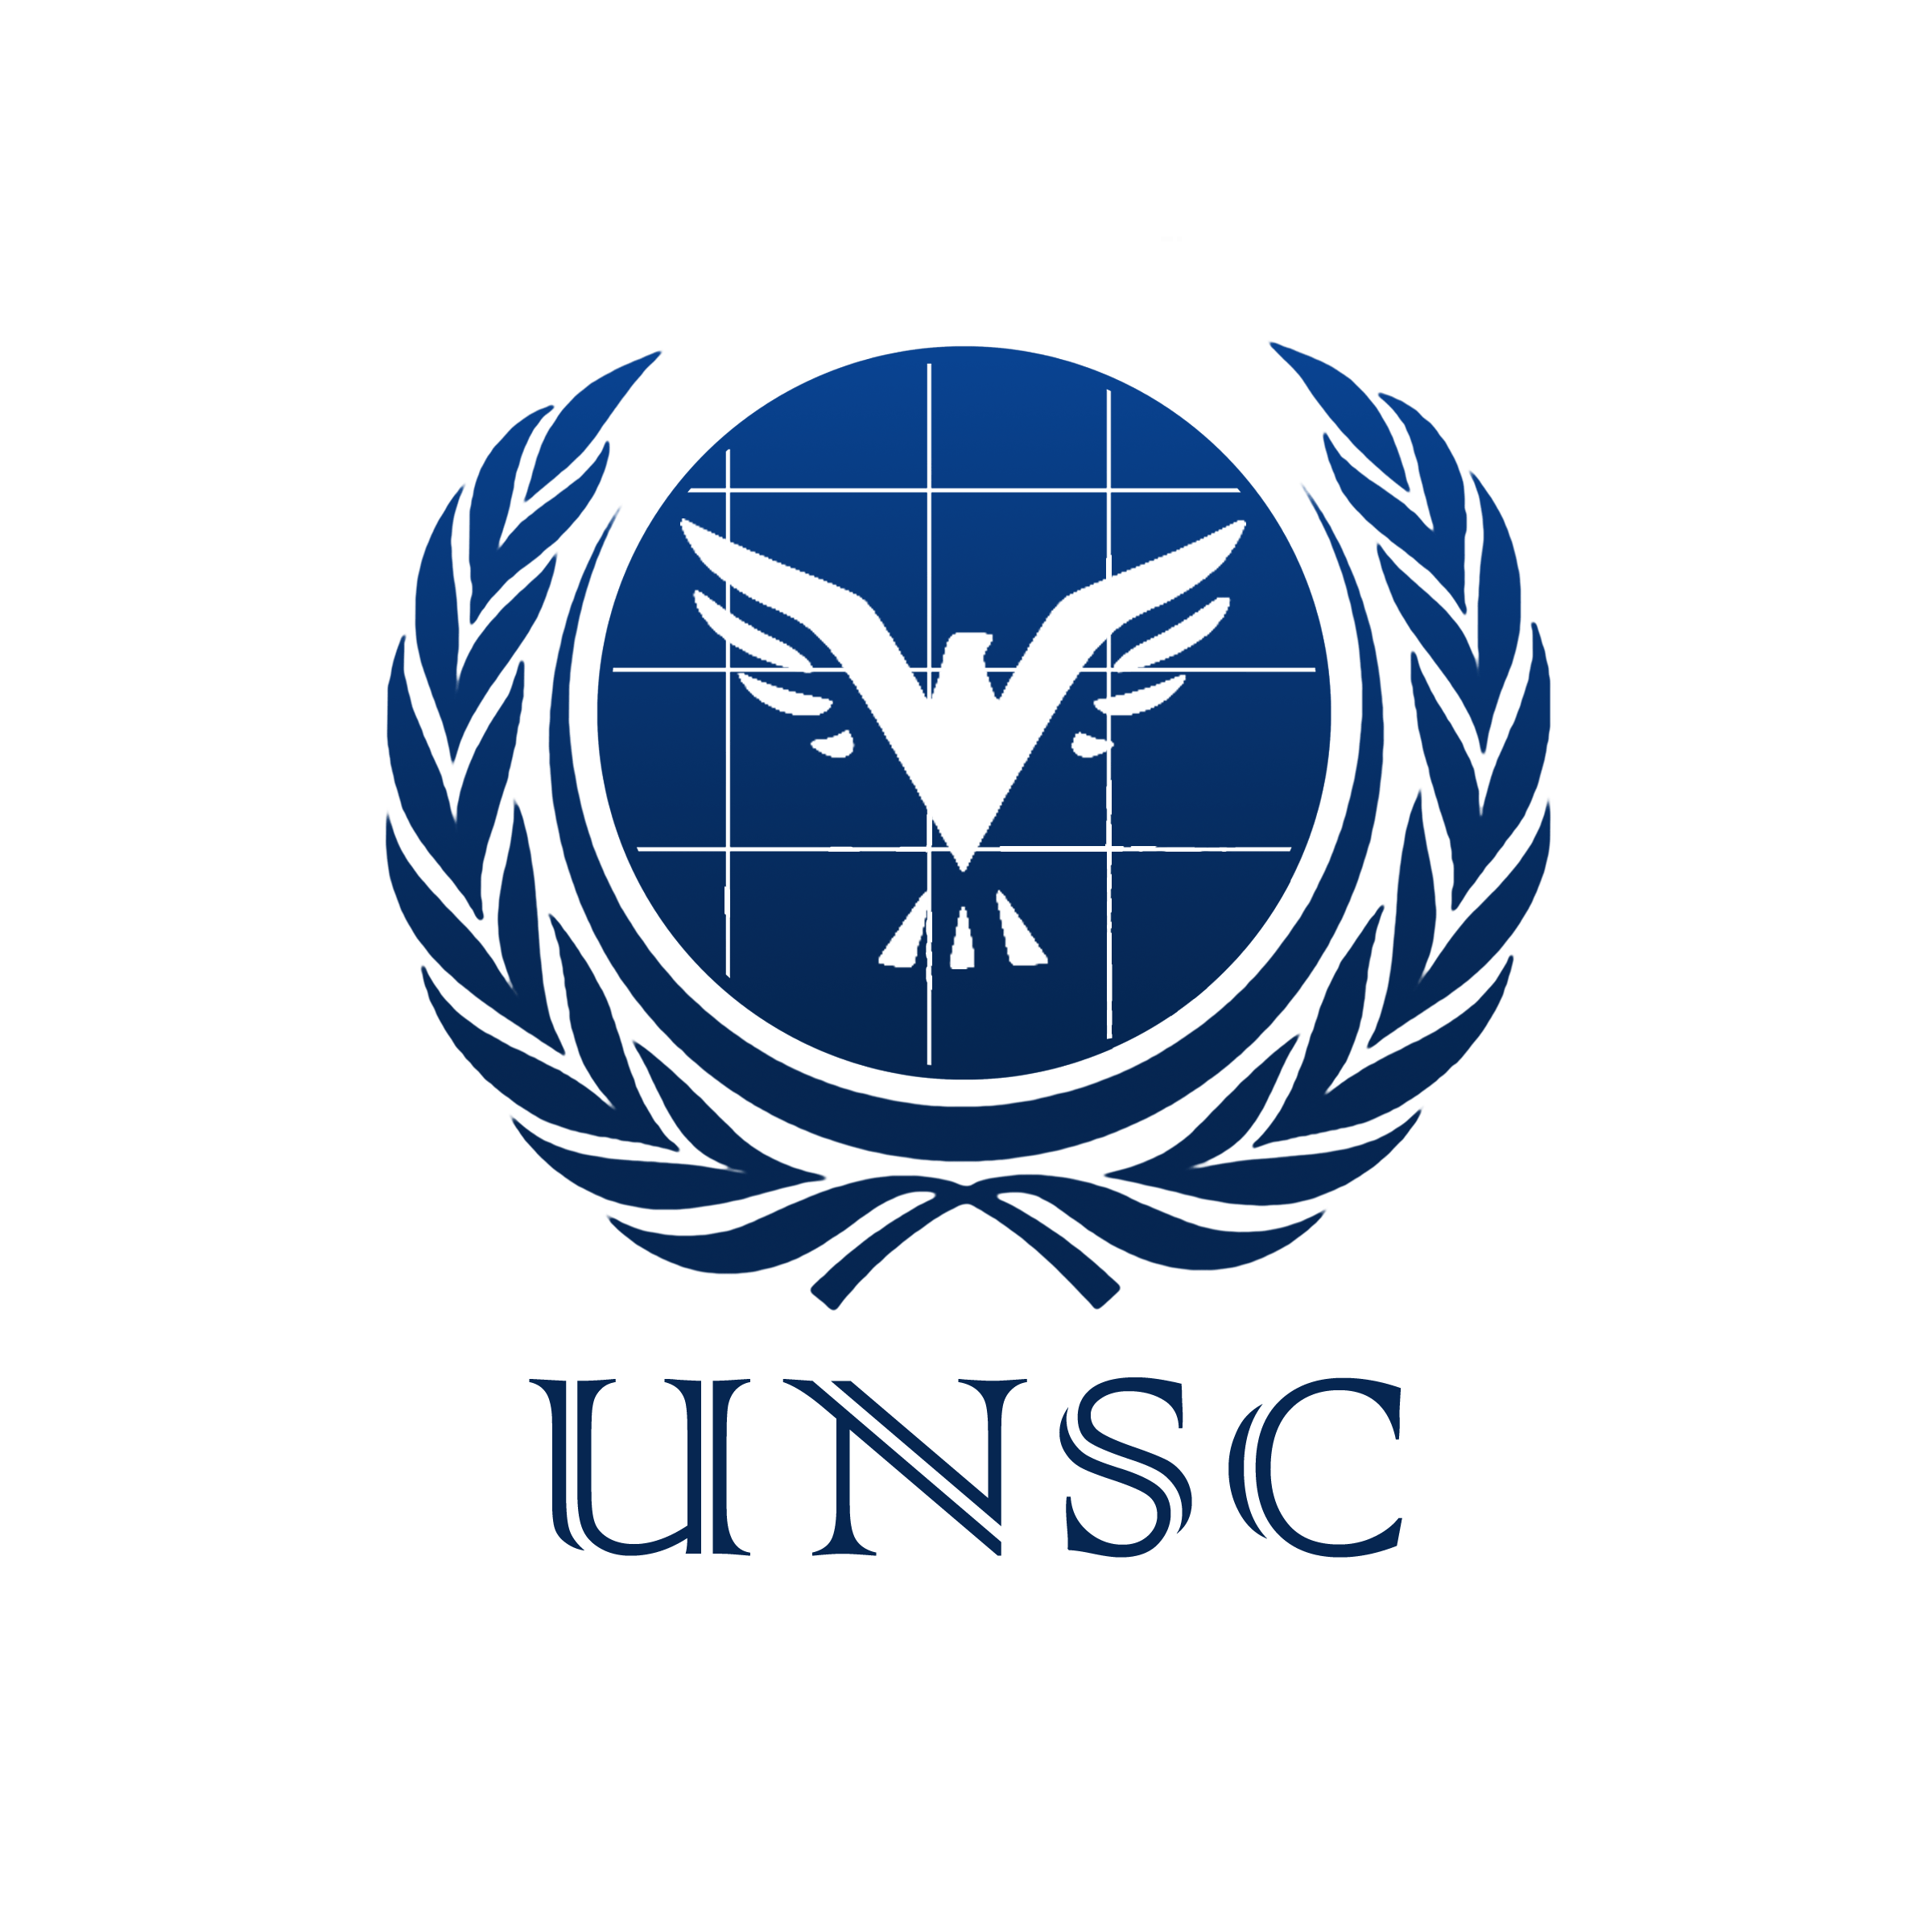 Pakistan has become non-permanent member of UN Security Council